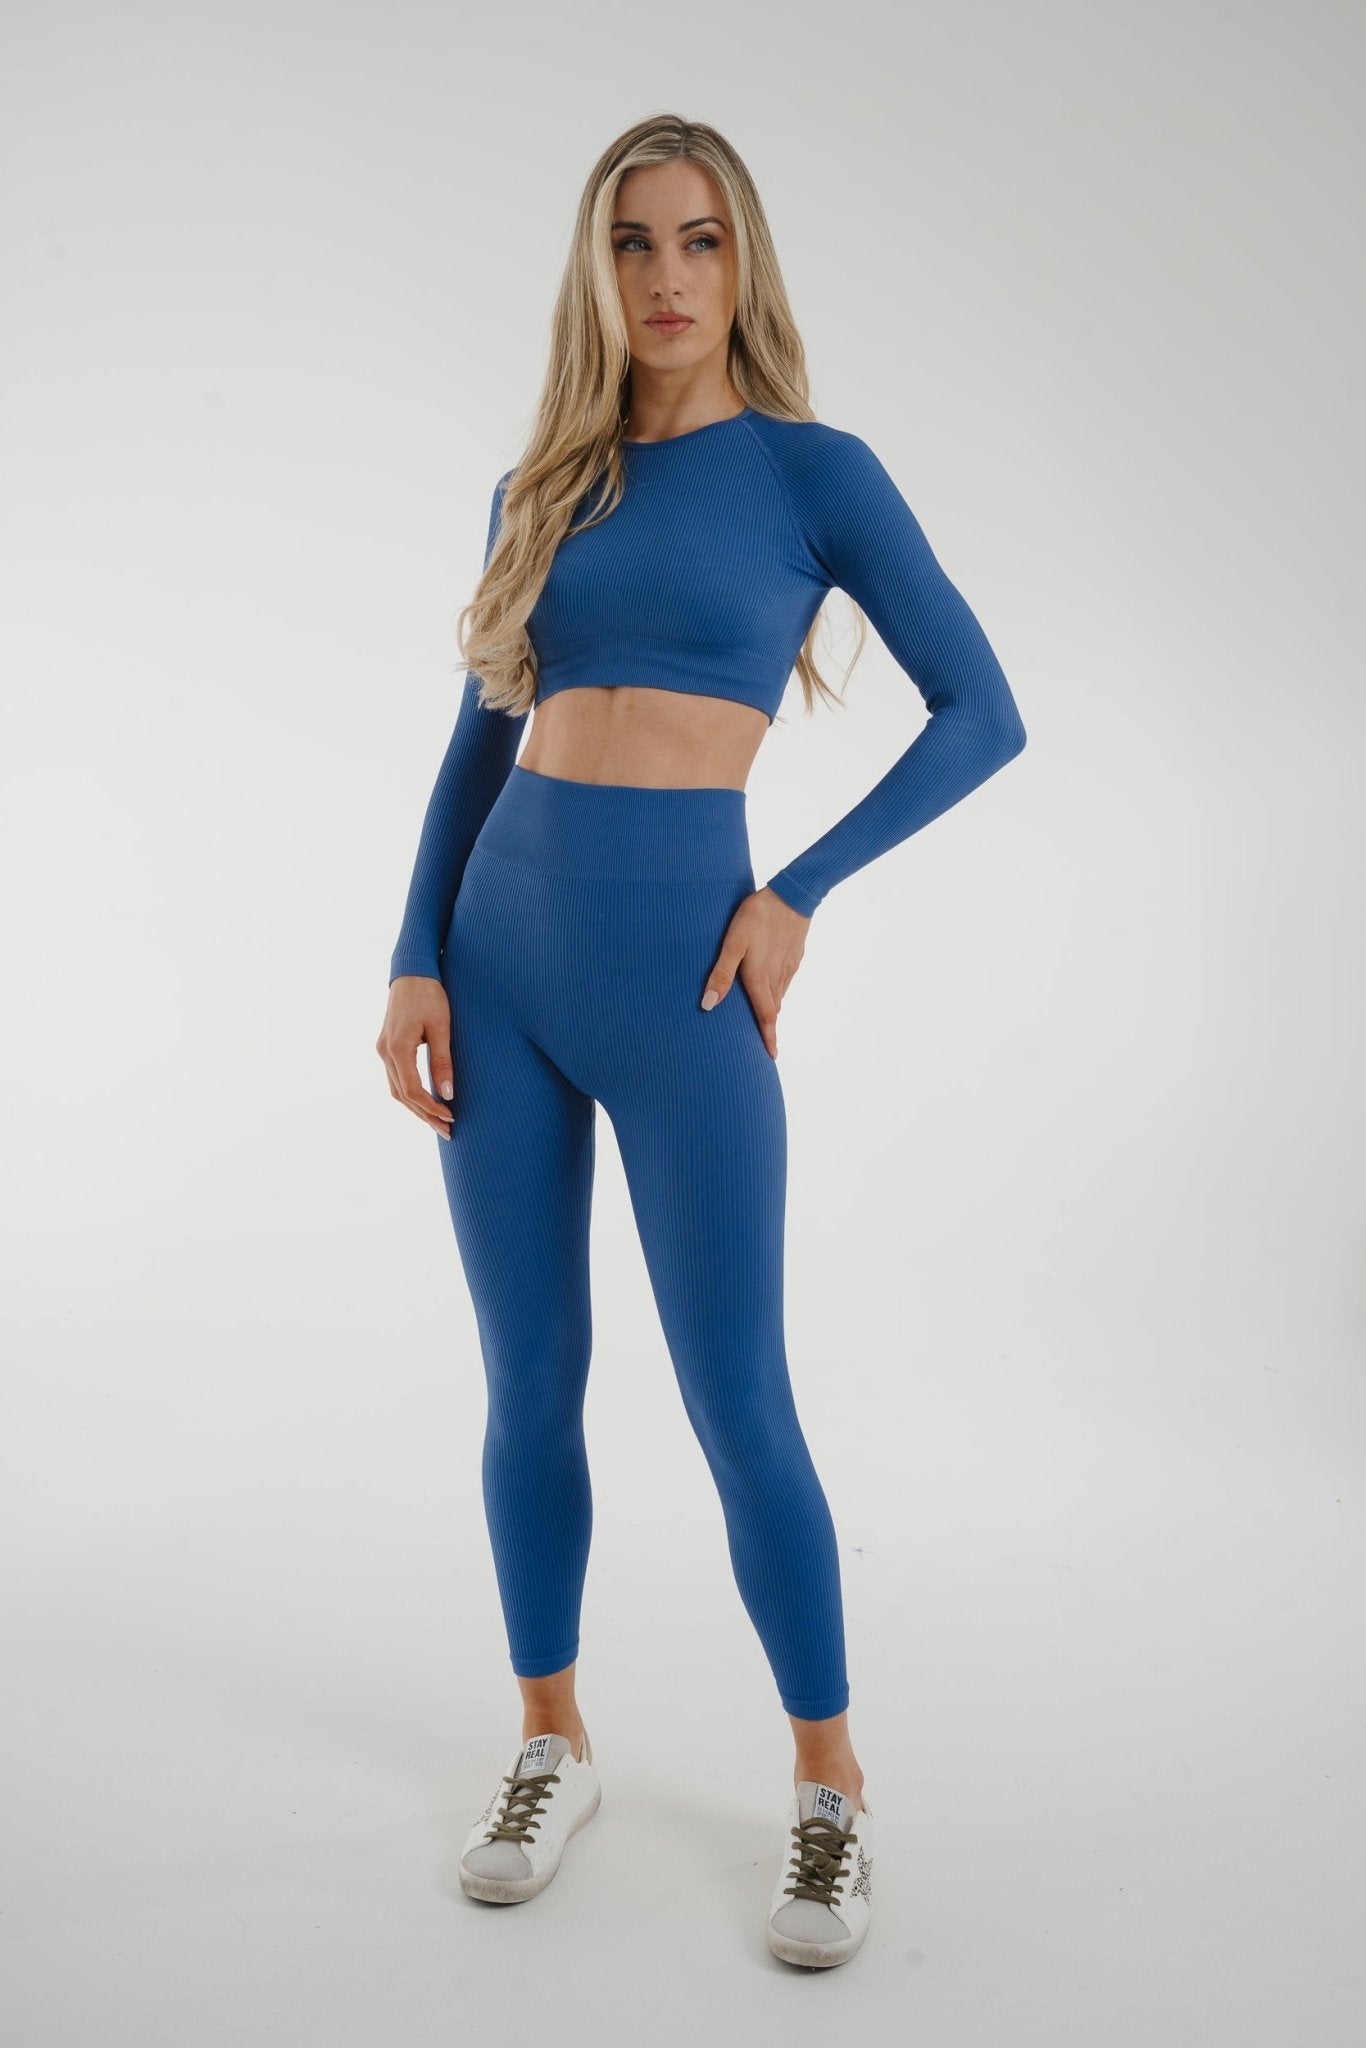 Freya Yoga Set In Blue - The Walk in Wardrobe